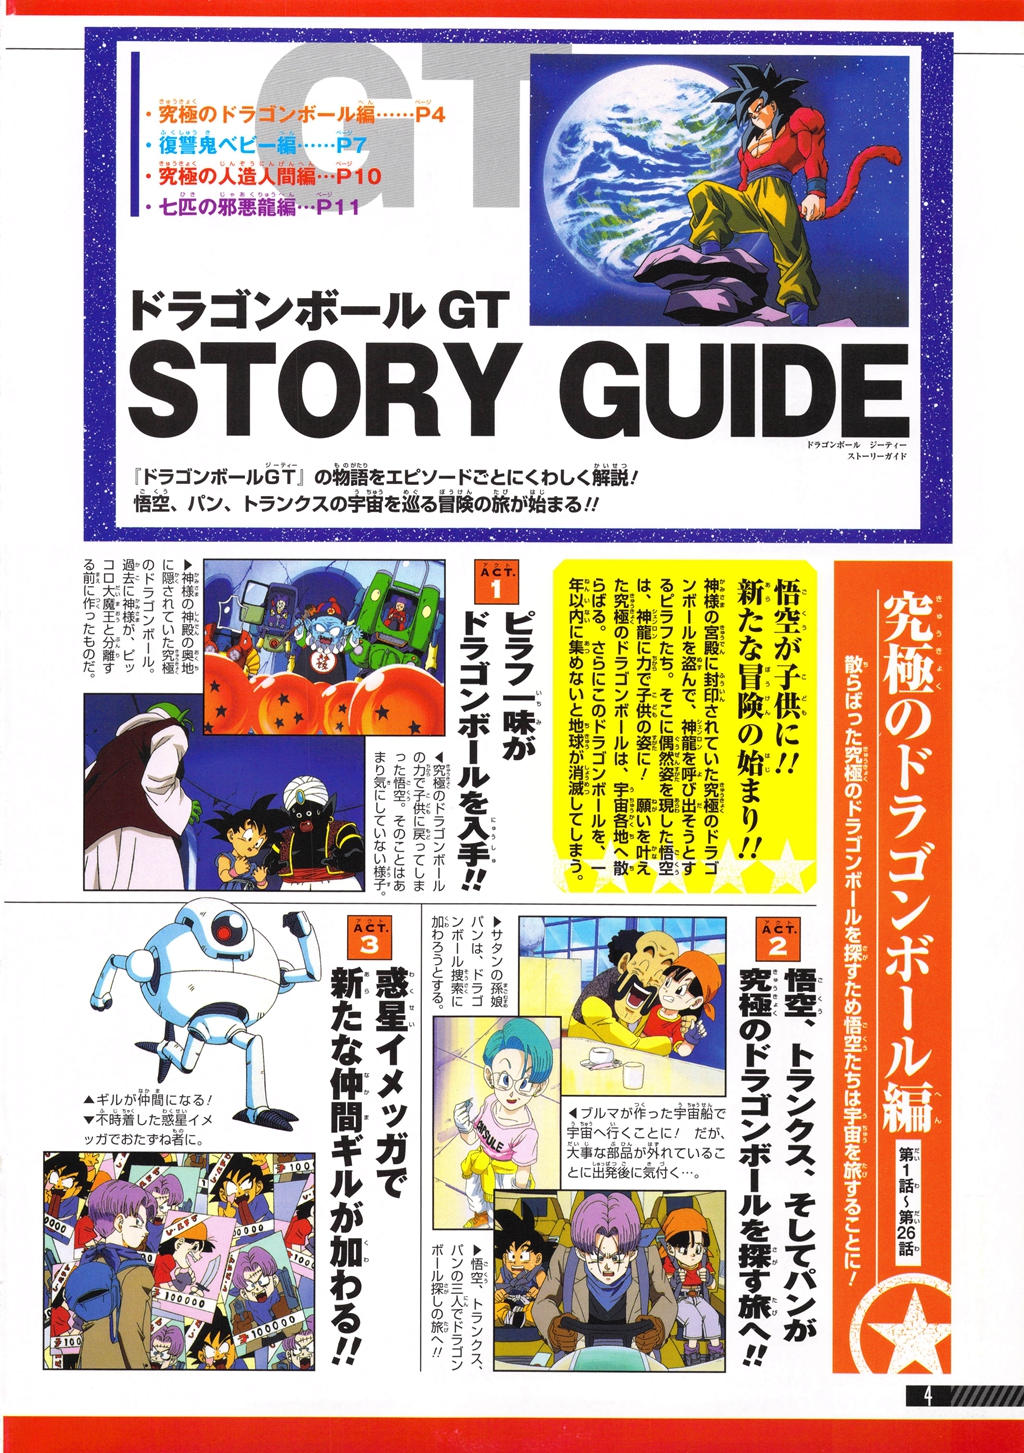 Dragon Ball Animation Guide Part 2 ドラゴンボール超全集 3 愛蔵版コミックス 鳥山明 Toriyama Akira Free Download Borrow And Streaming Internet Archive